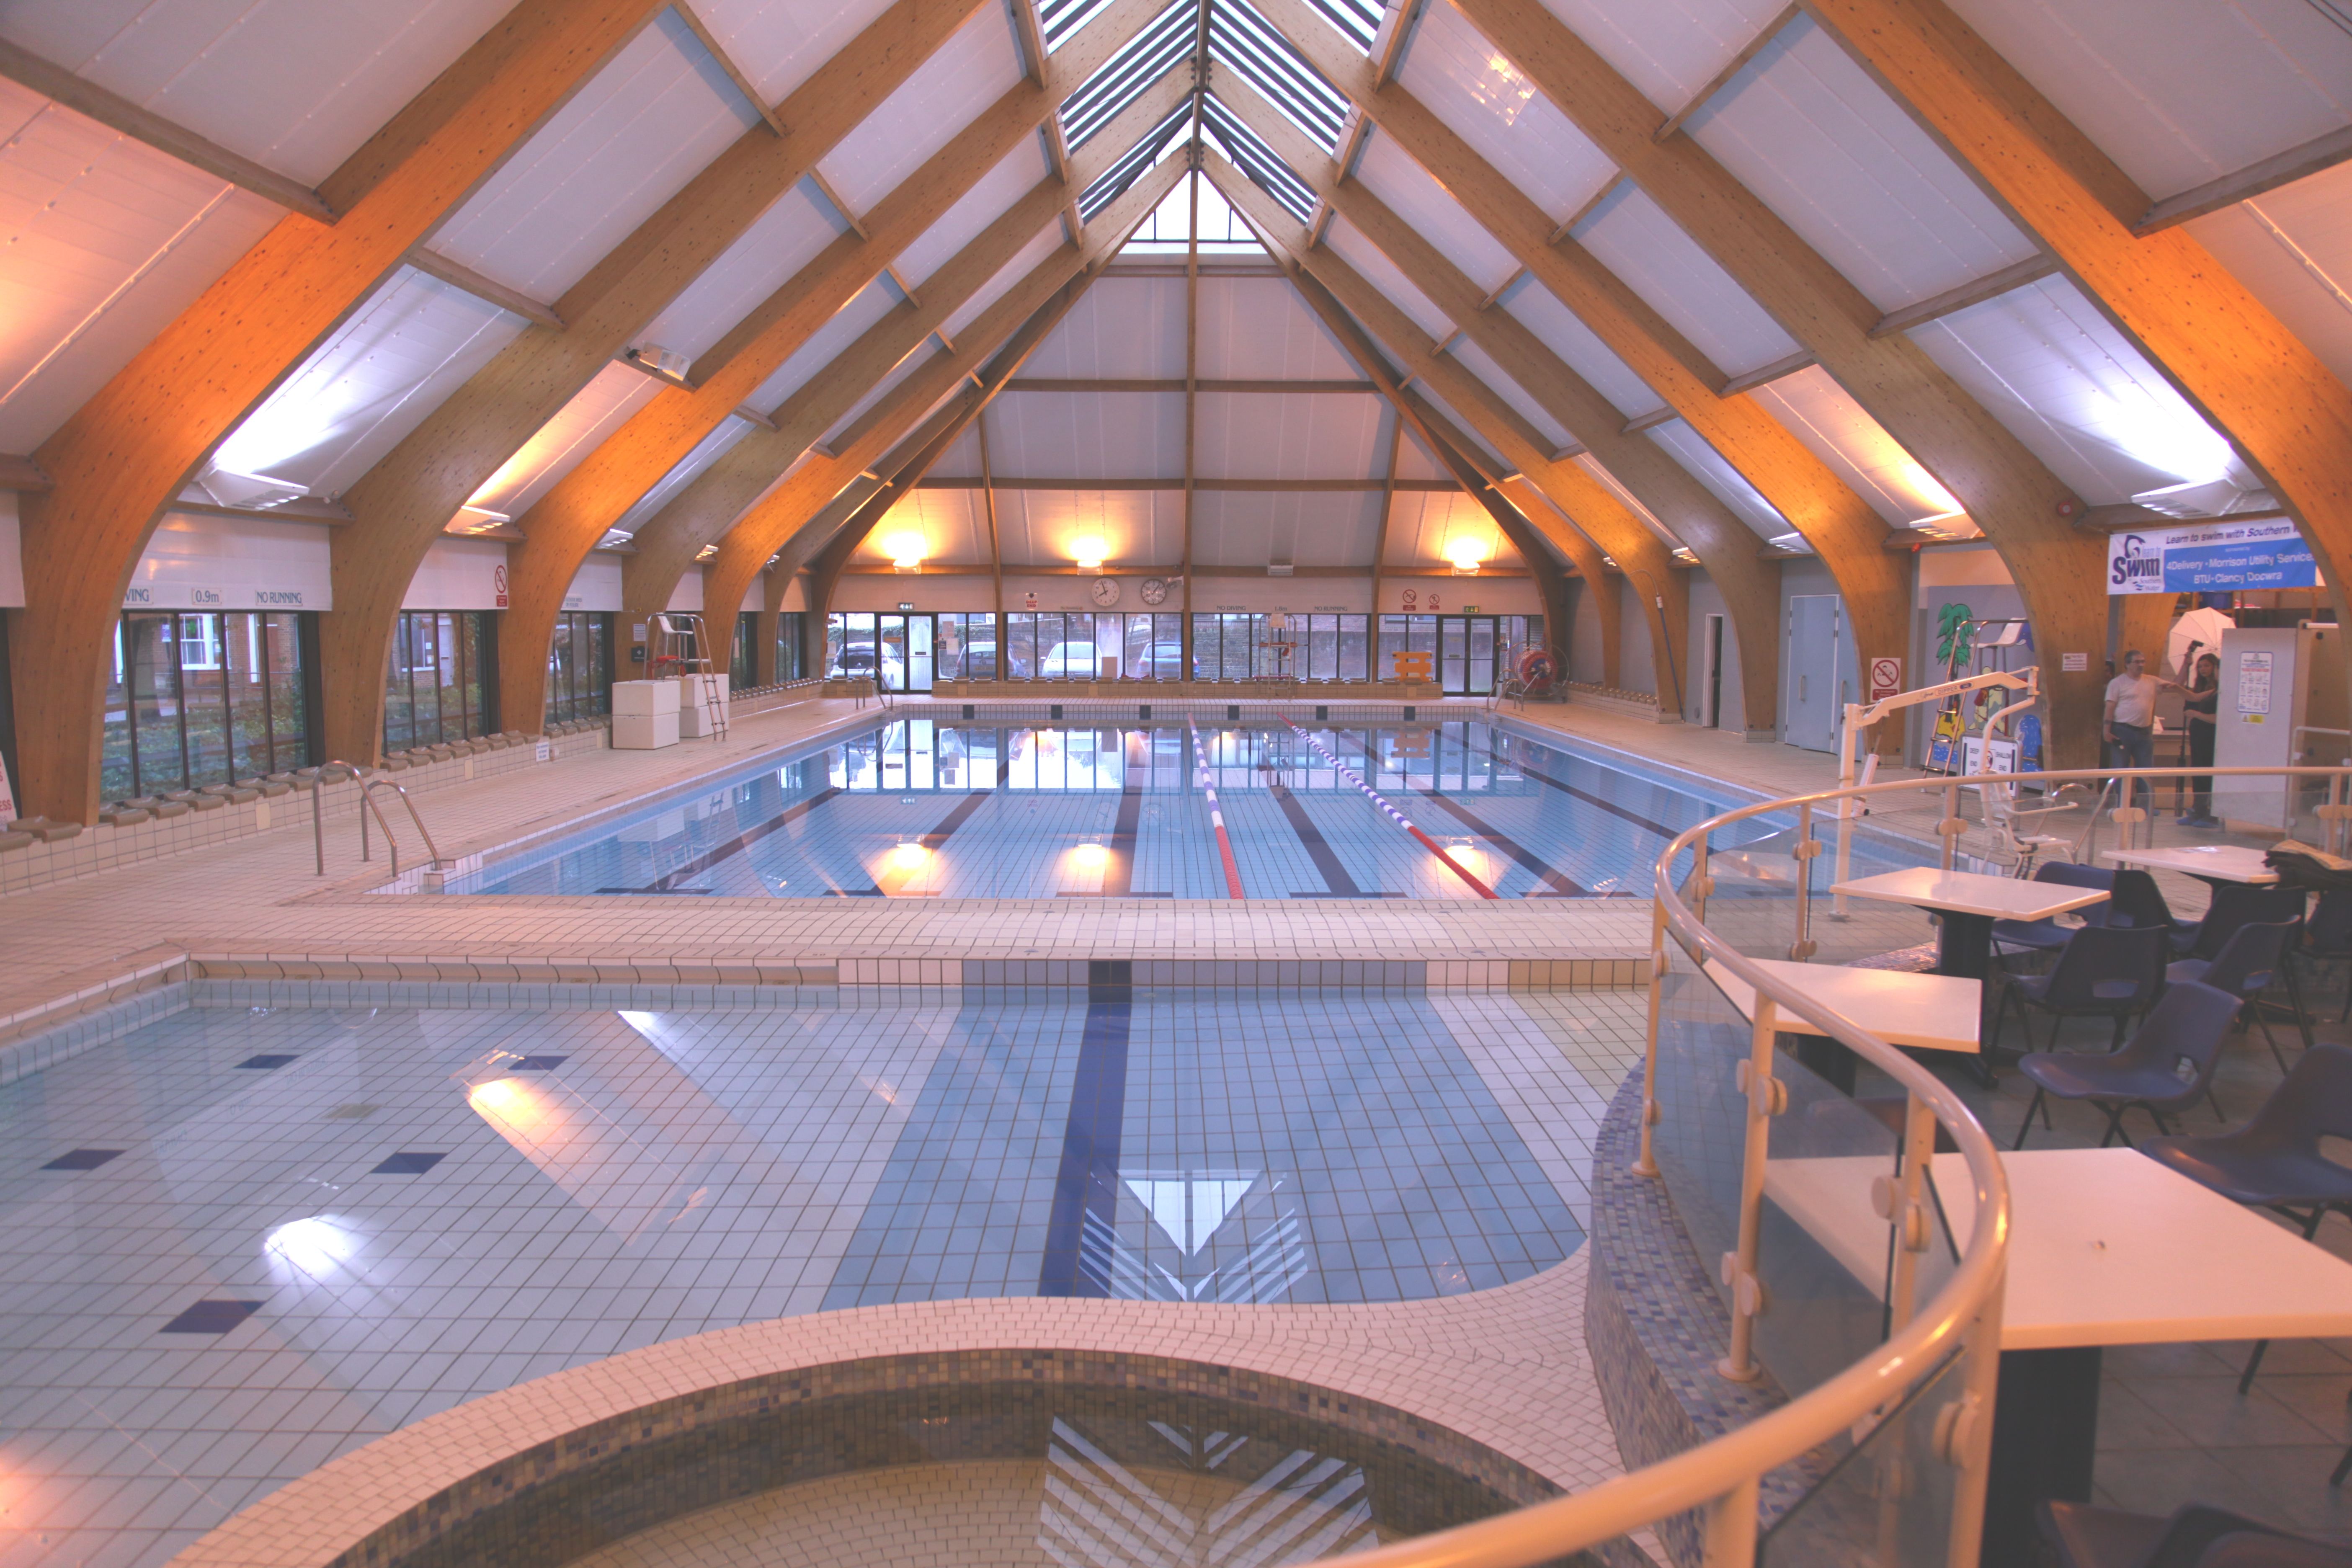 Faversham Pools Interior